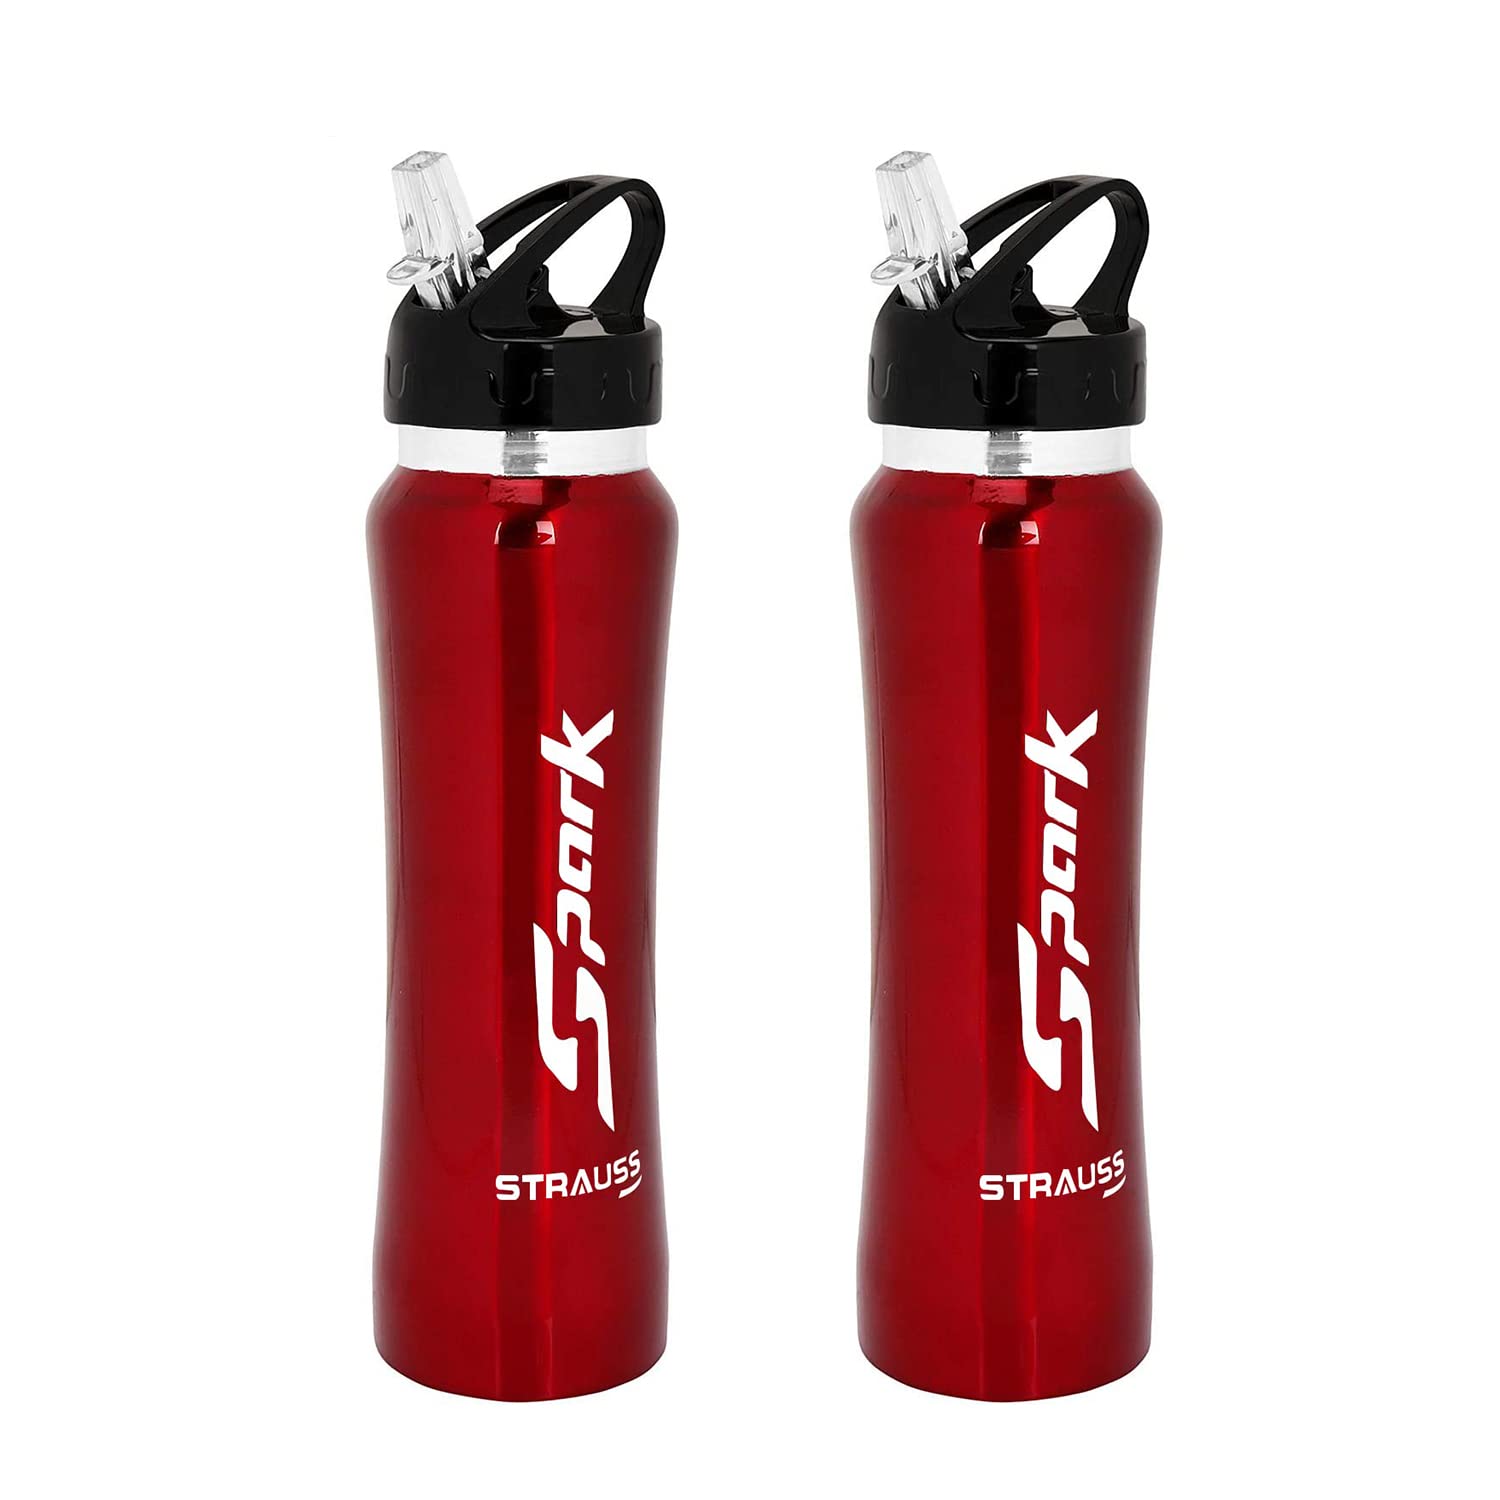 STRAUSS Spark Stainless Steel Water Bottle, Metal Finish | Sipper Bottle | Gym Bottle